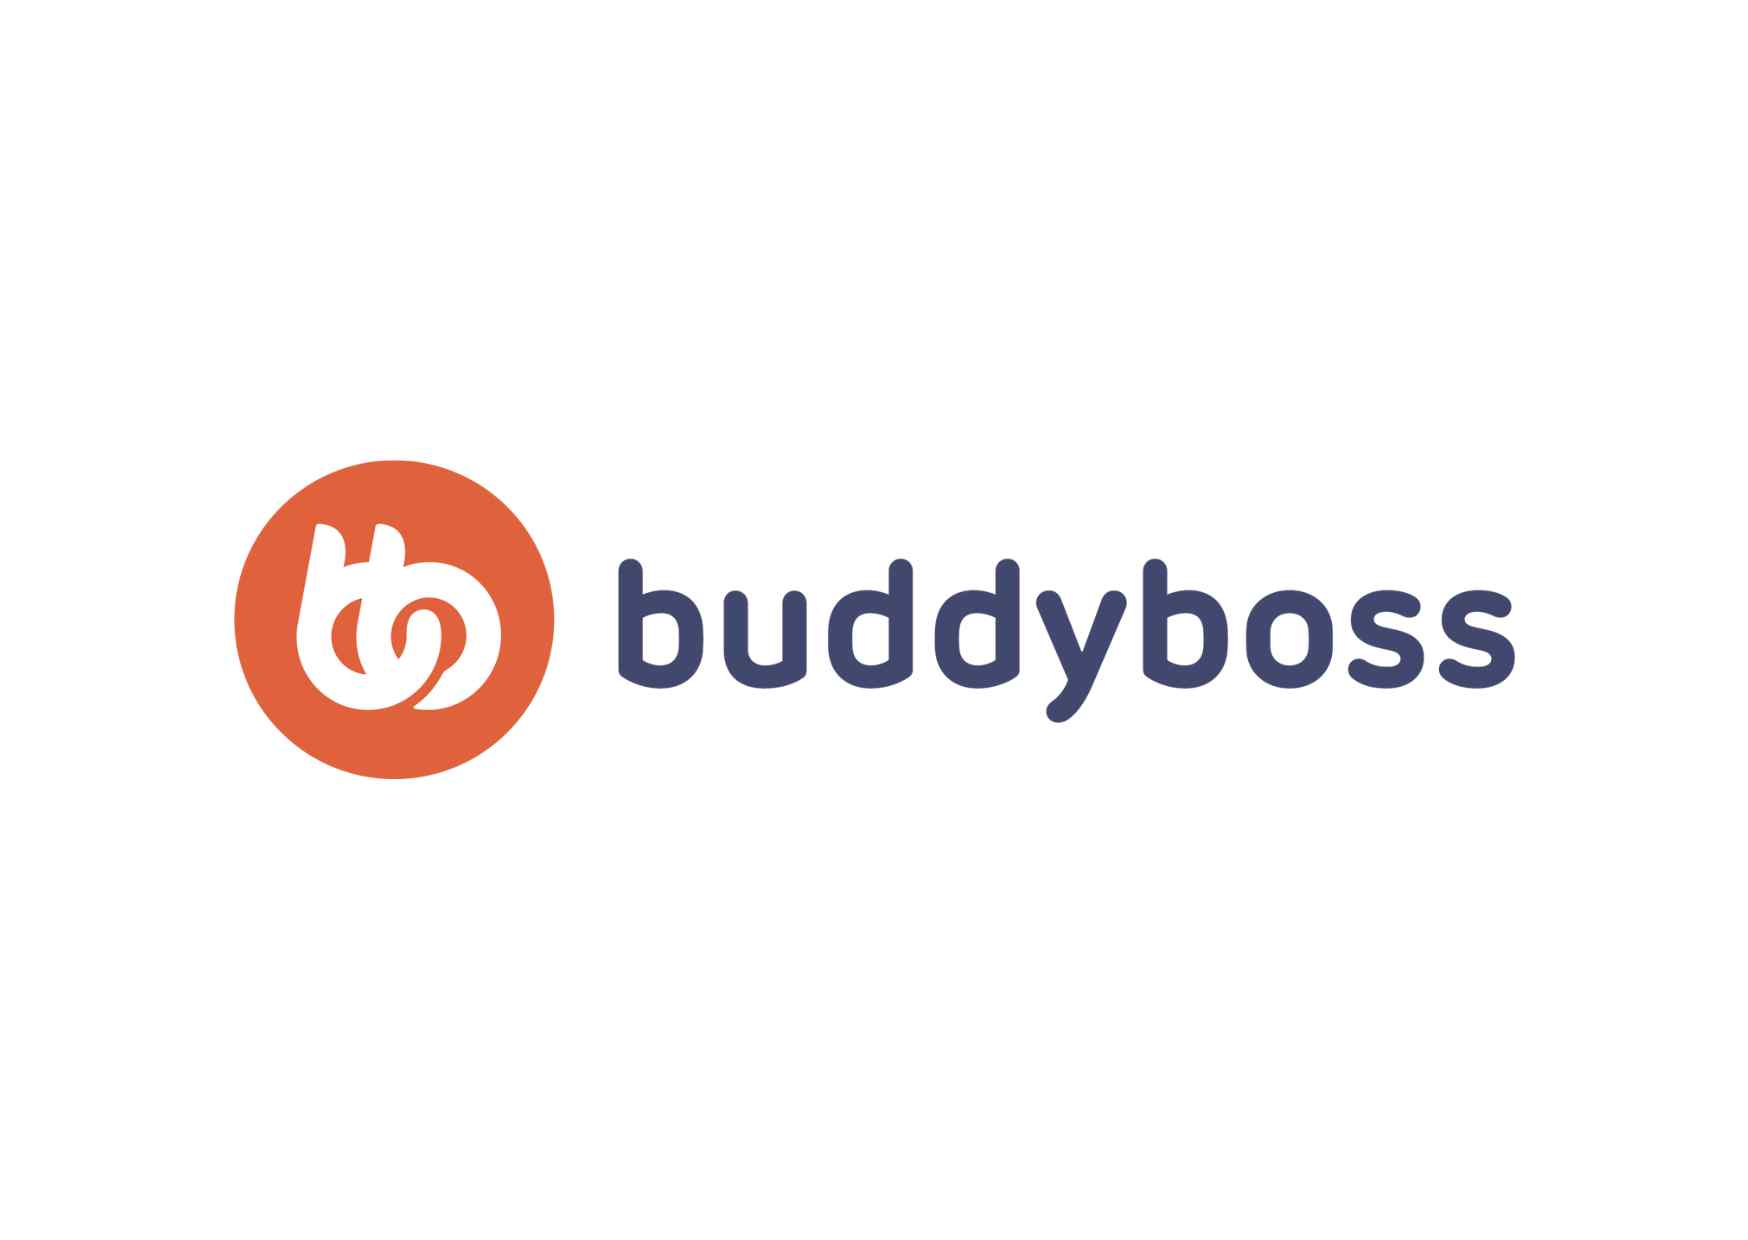 Buddyboss-WeblifyAi`s All Useful Tools